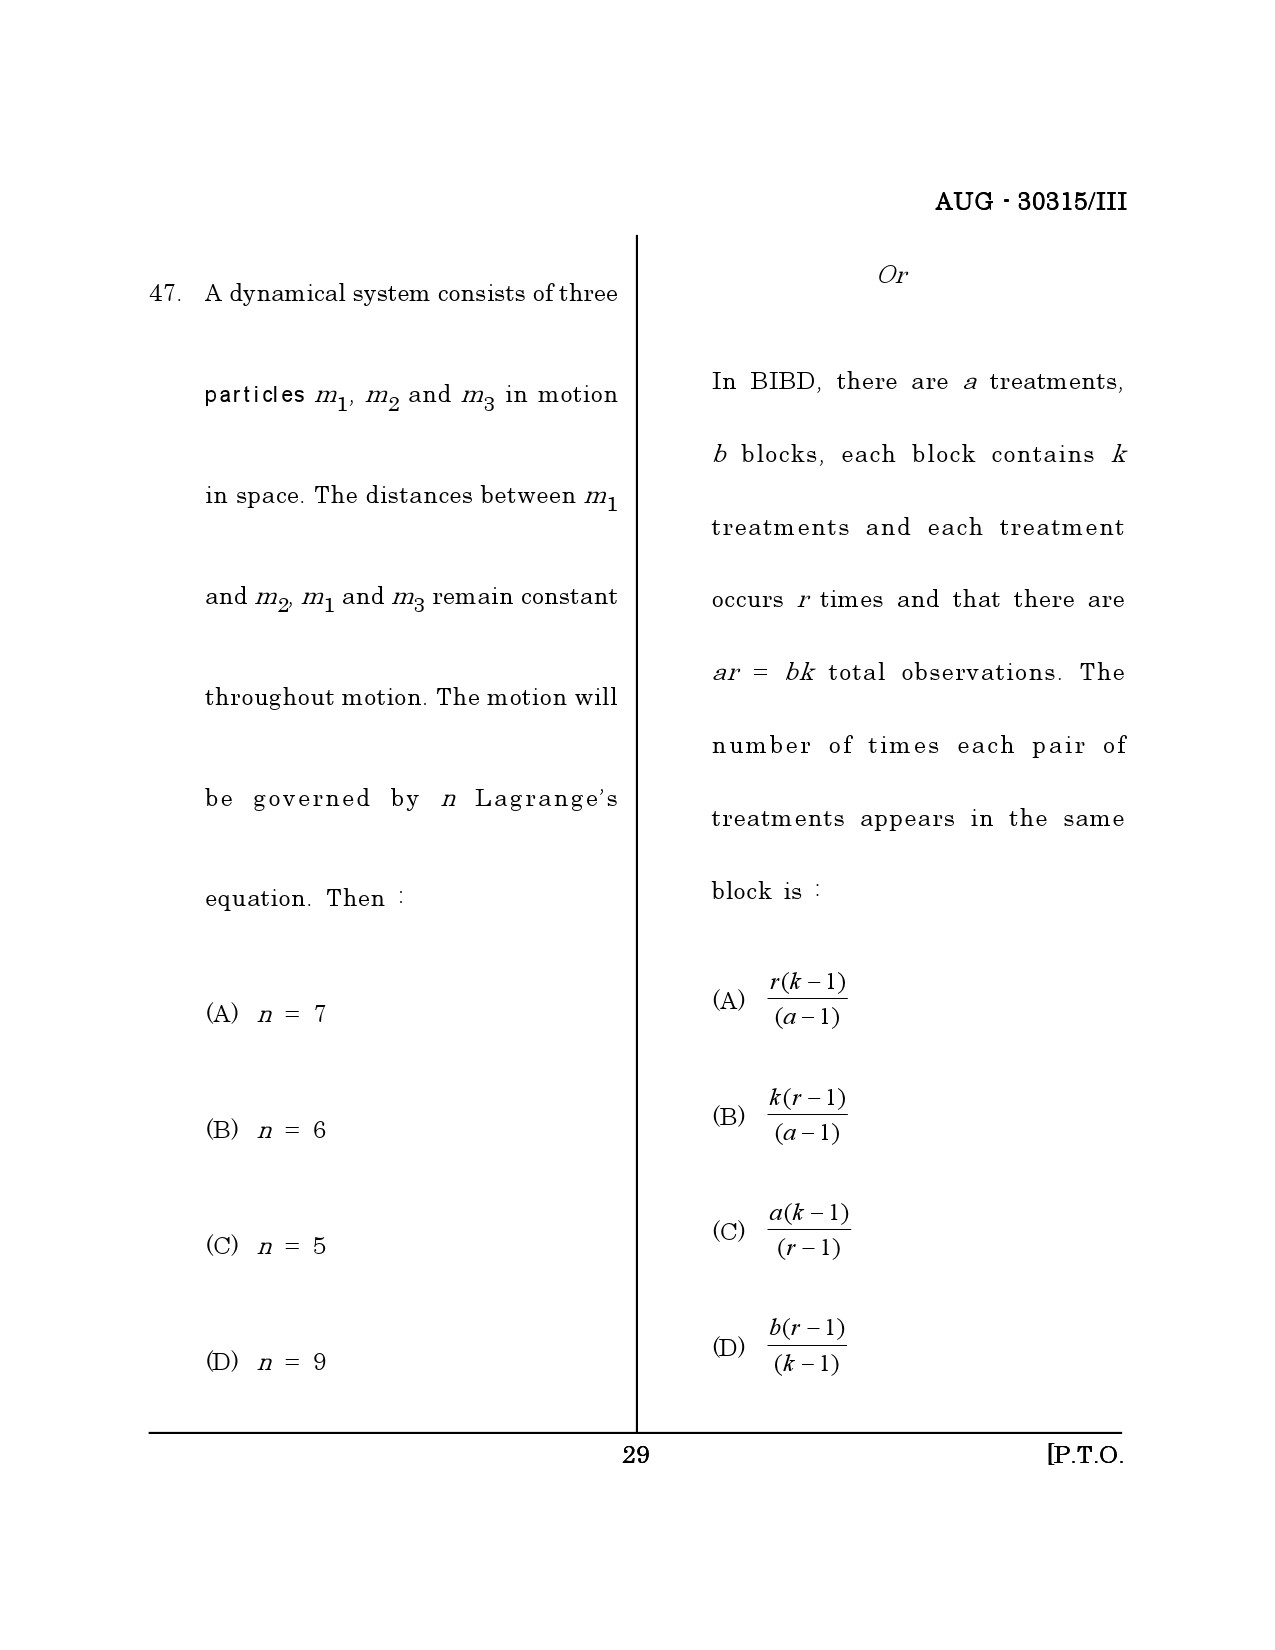 Maharashtra SET Mathematical Sciences Question Paper III August 2015 28